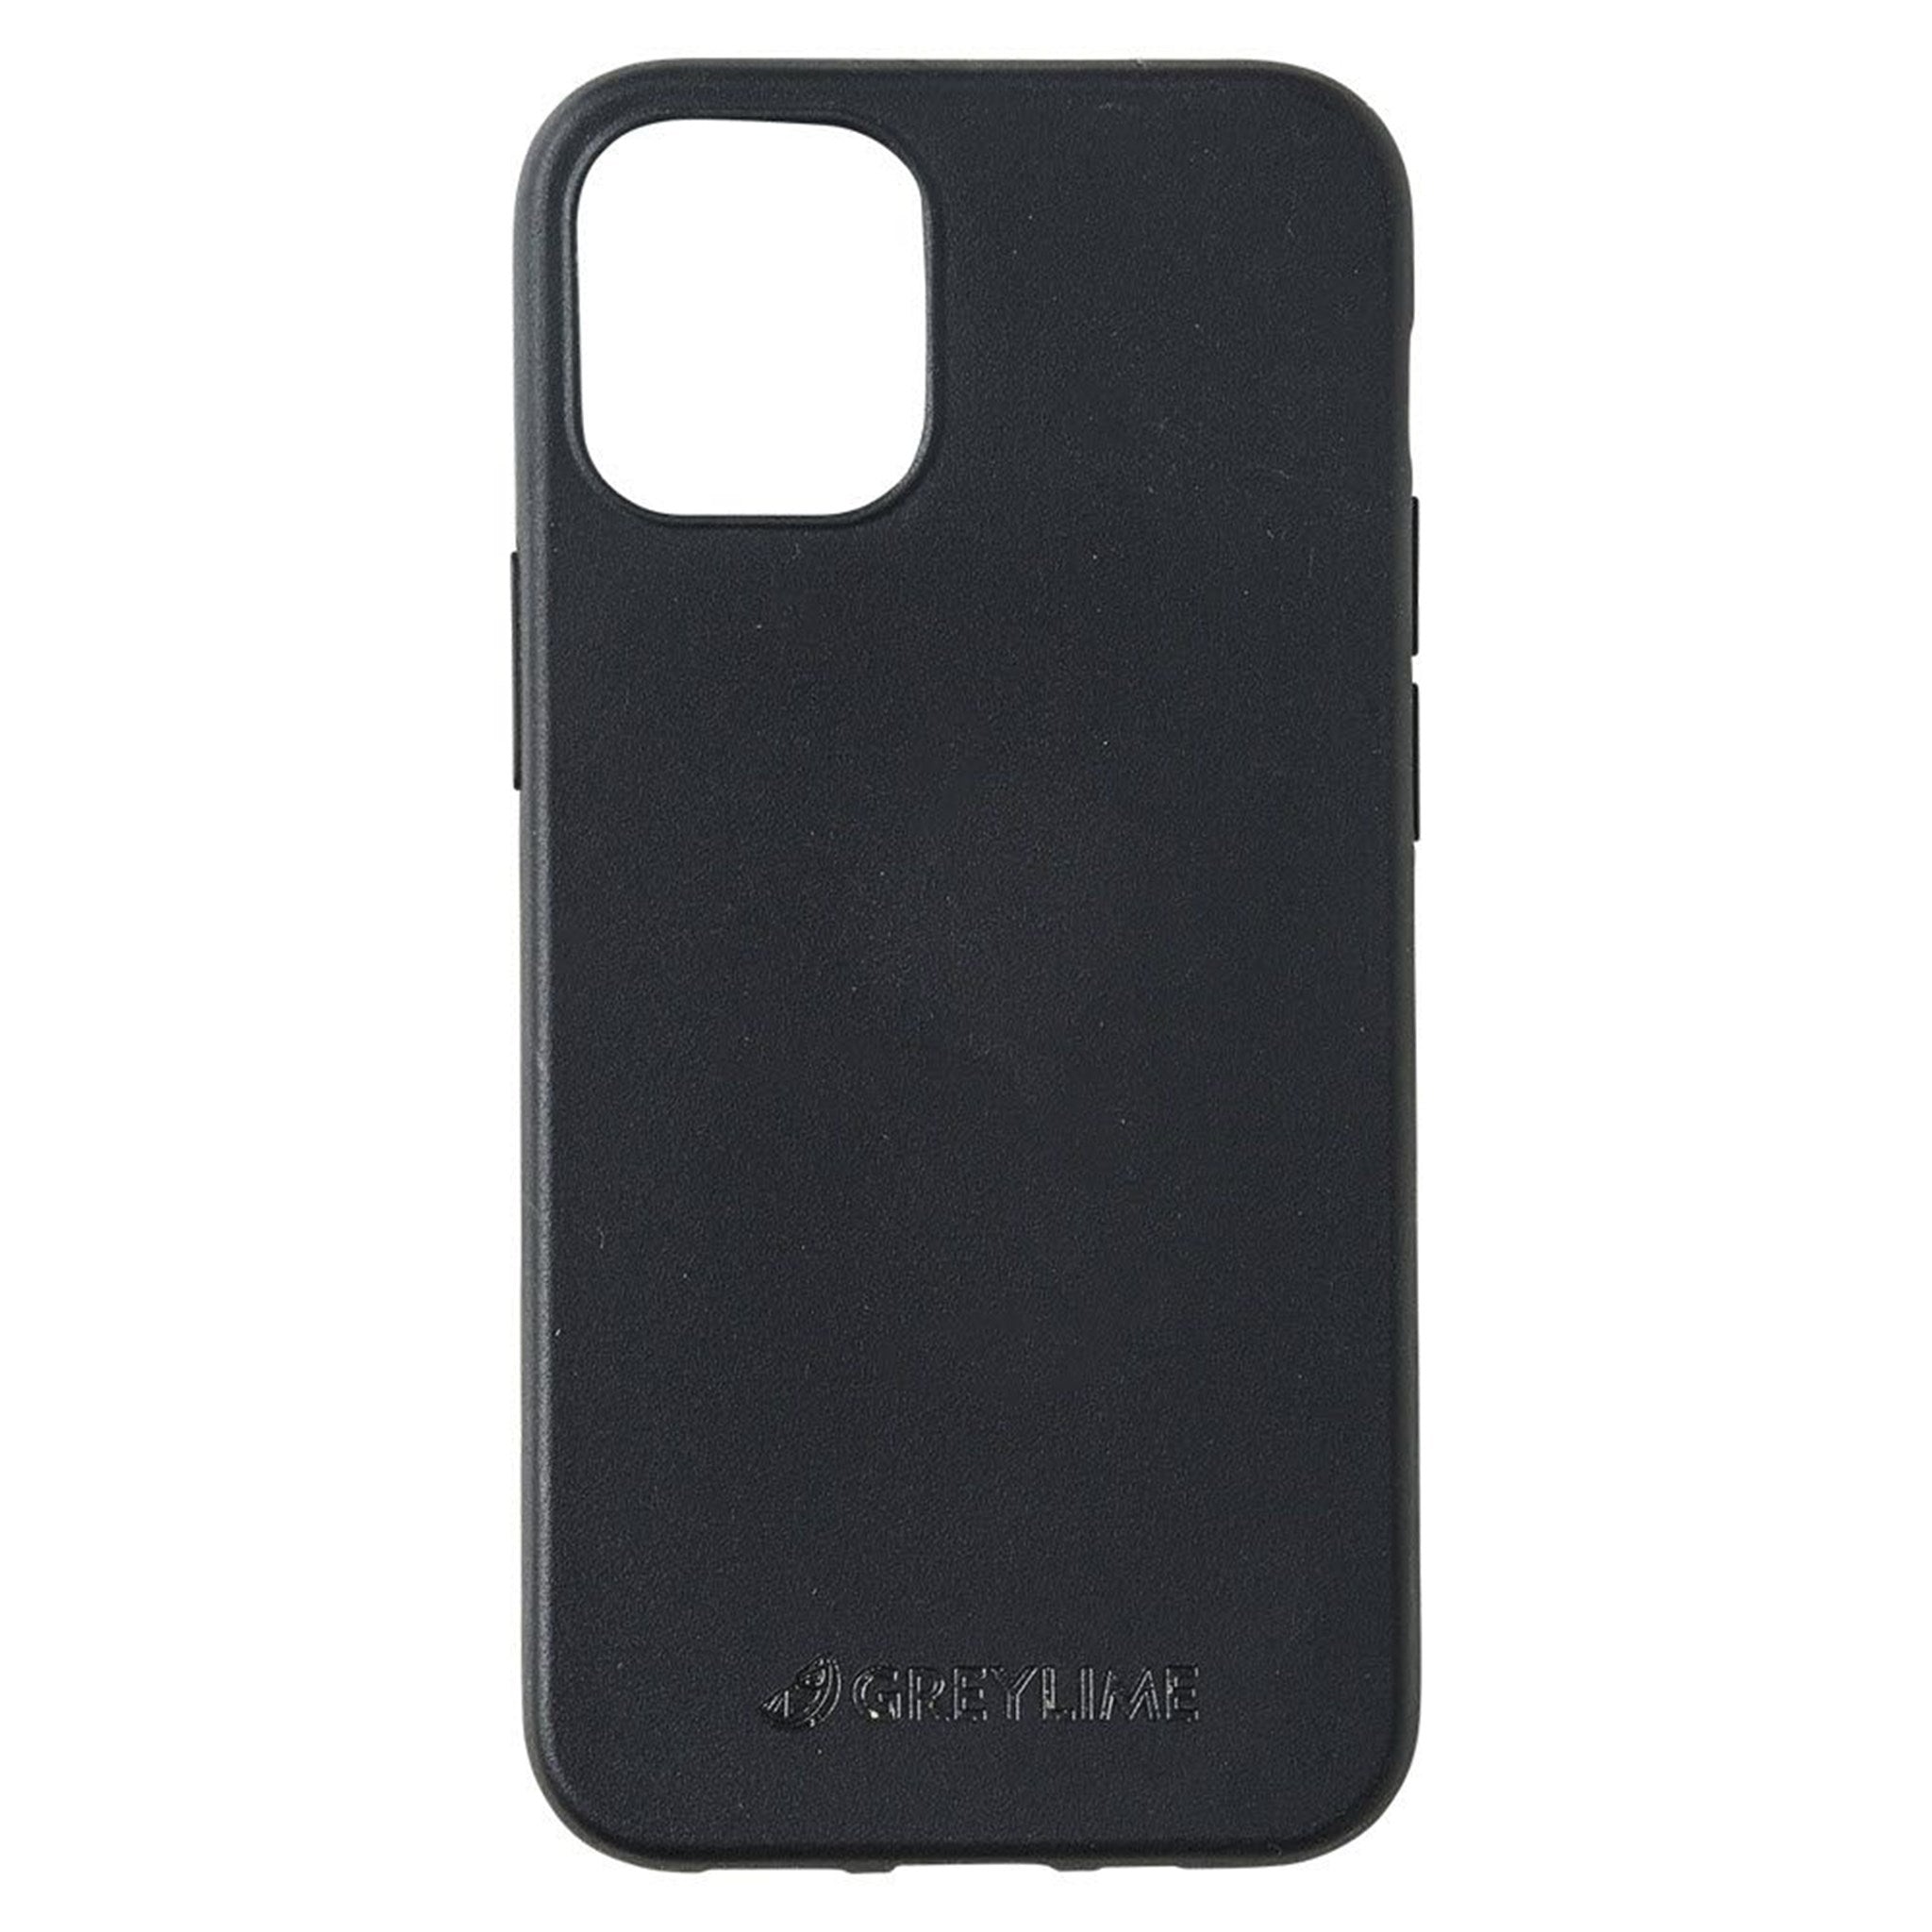 GreyLime-iPhone-12-Mini-Biodegdrable-Cover-Black-COIP12S01-V3.jpg